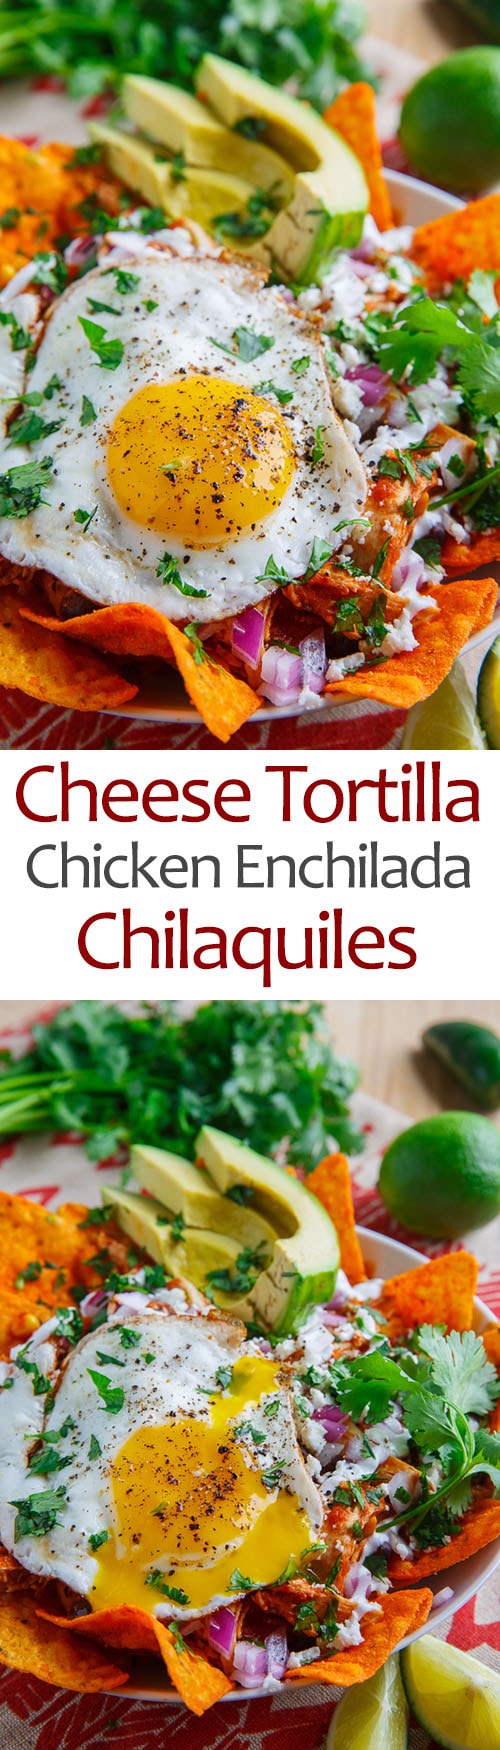 Cheese Tortilla Chip Chicken Enchilada Chilaquiles